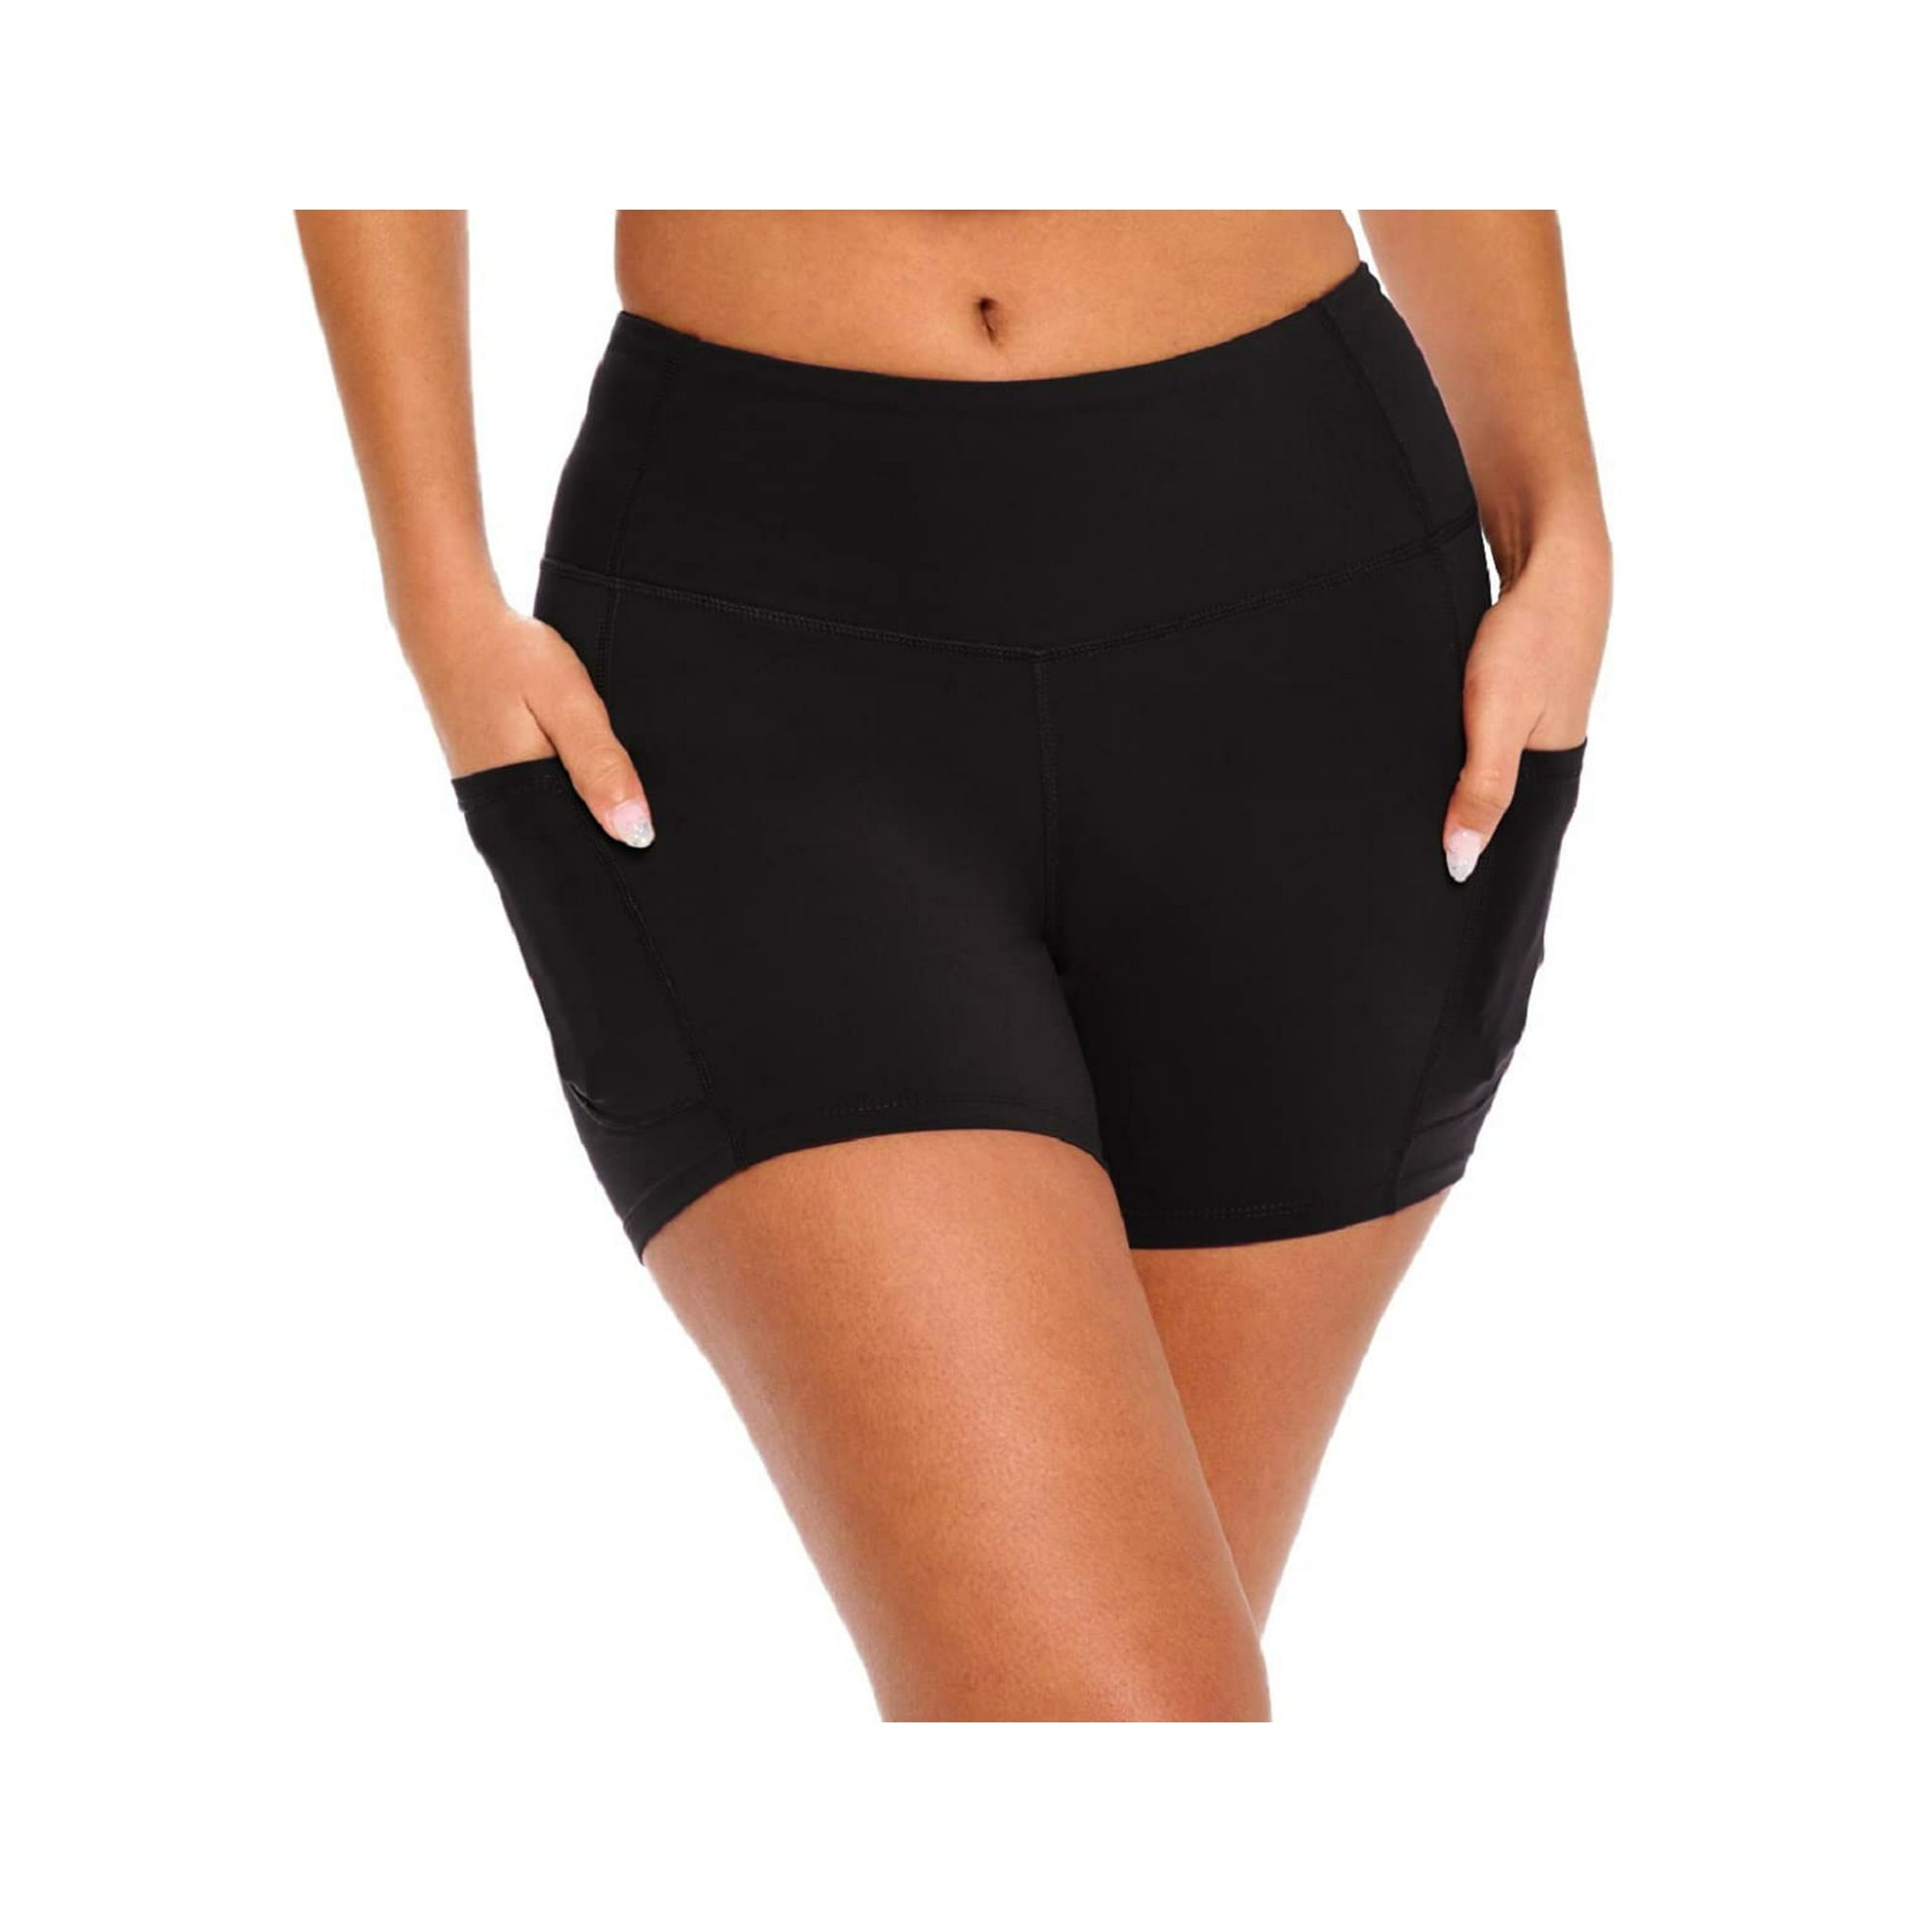 M&M SCRUBS Women's High Waist Yoga Shorts&nbsp;Tummy Control with Deep Pockets (X-Small, Black)